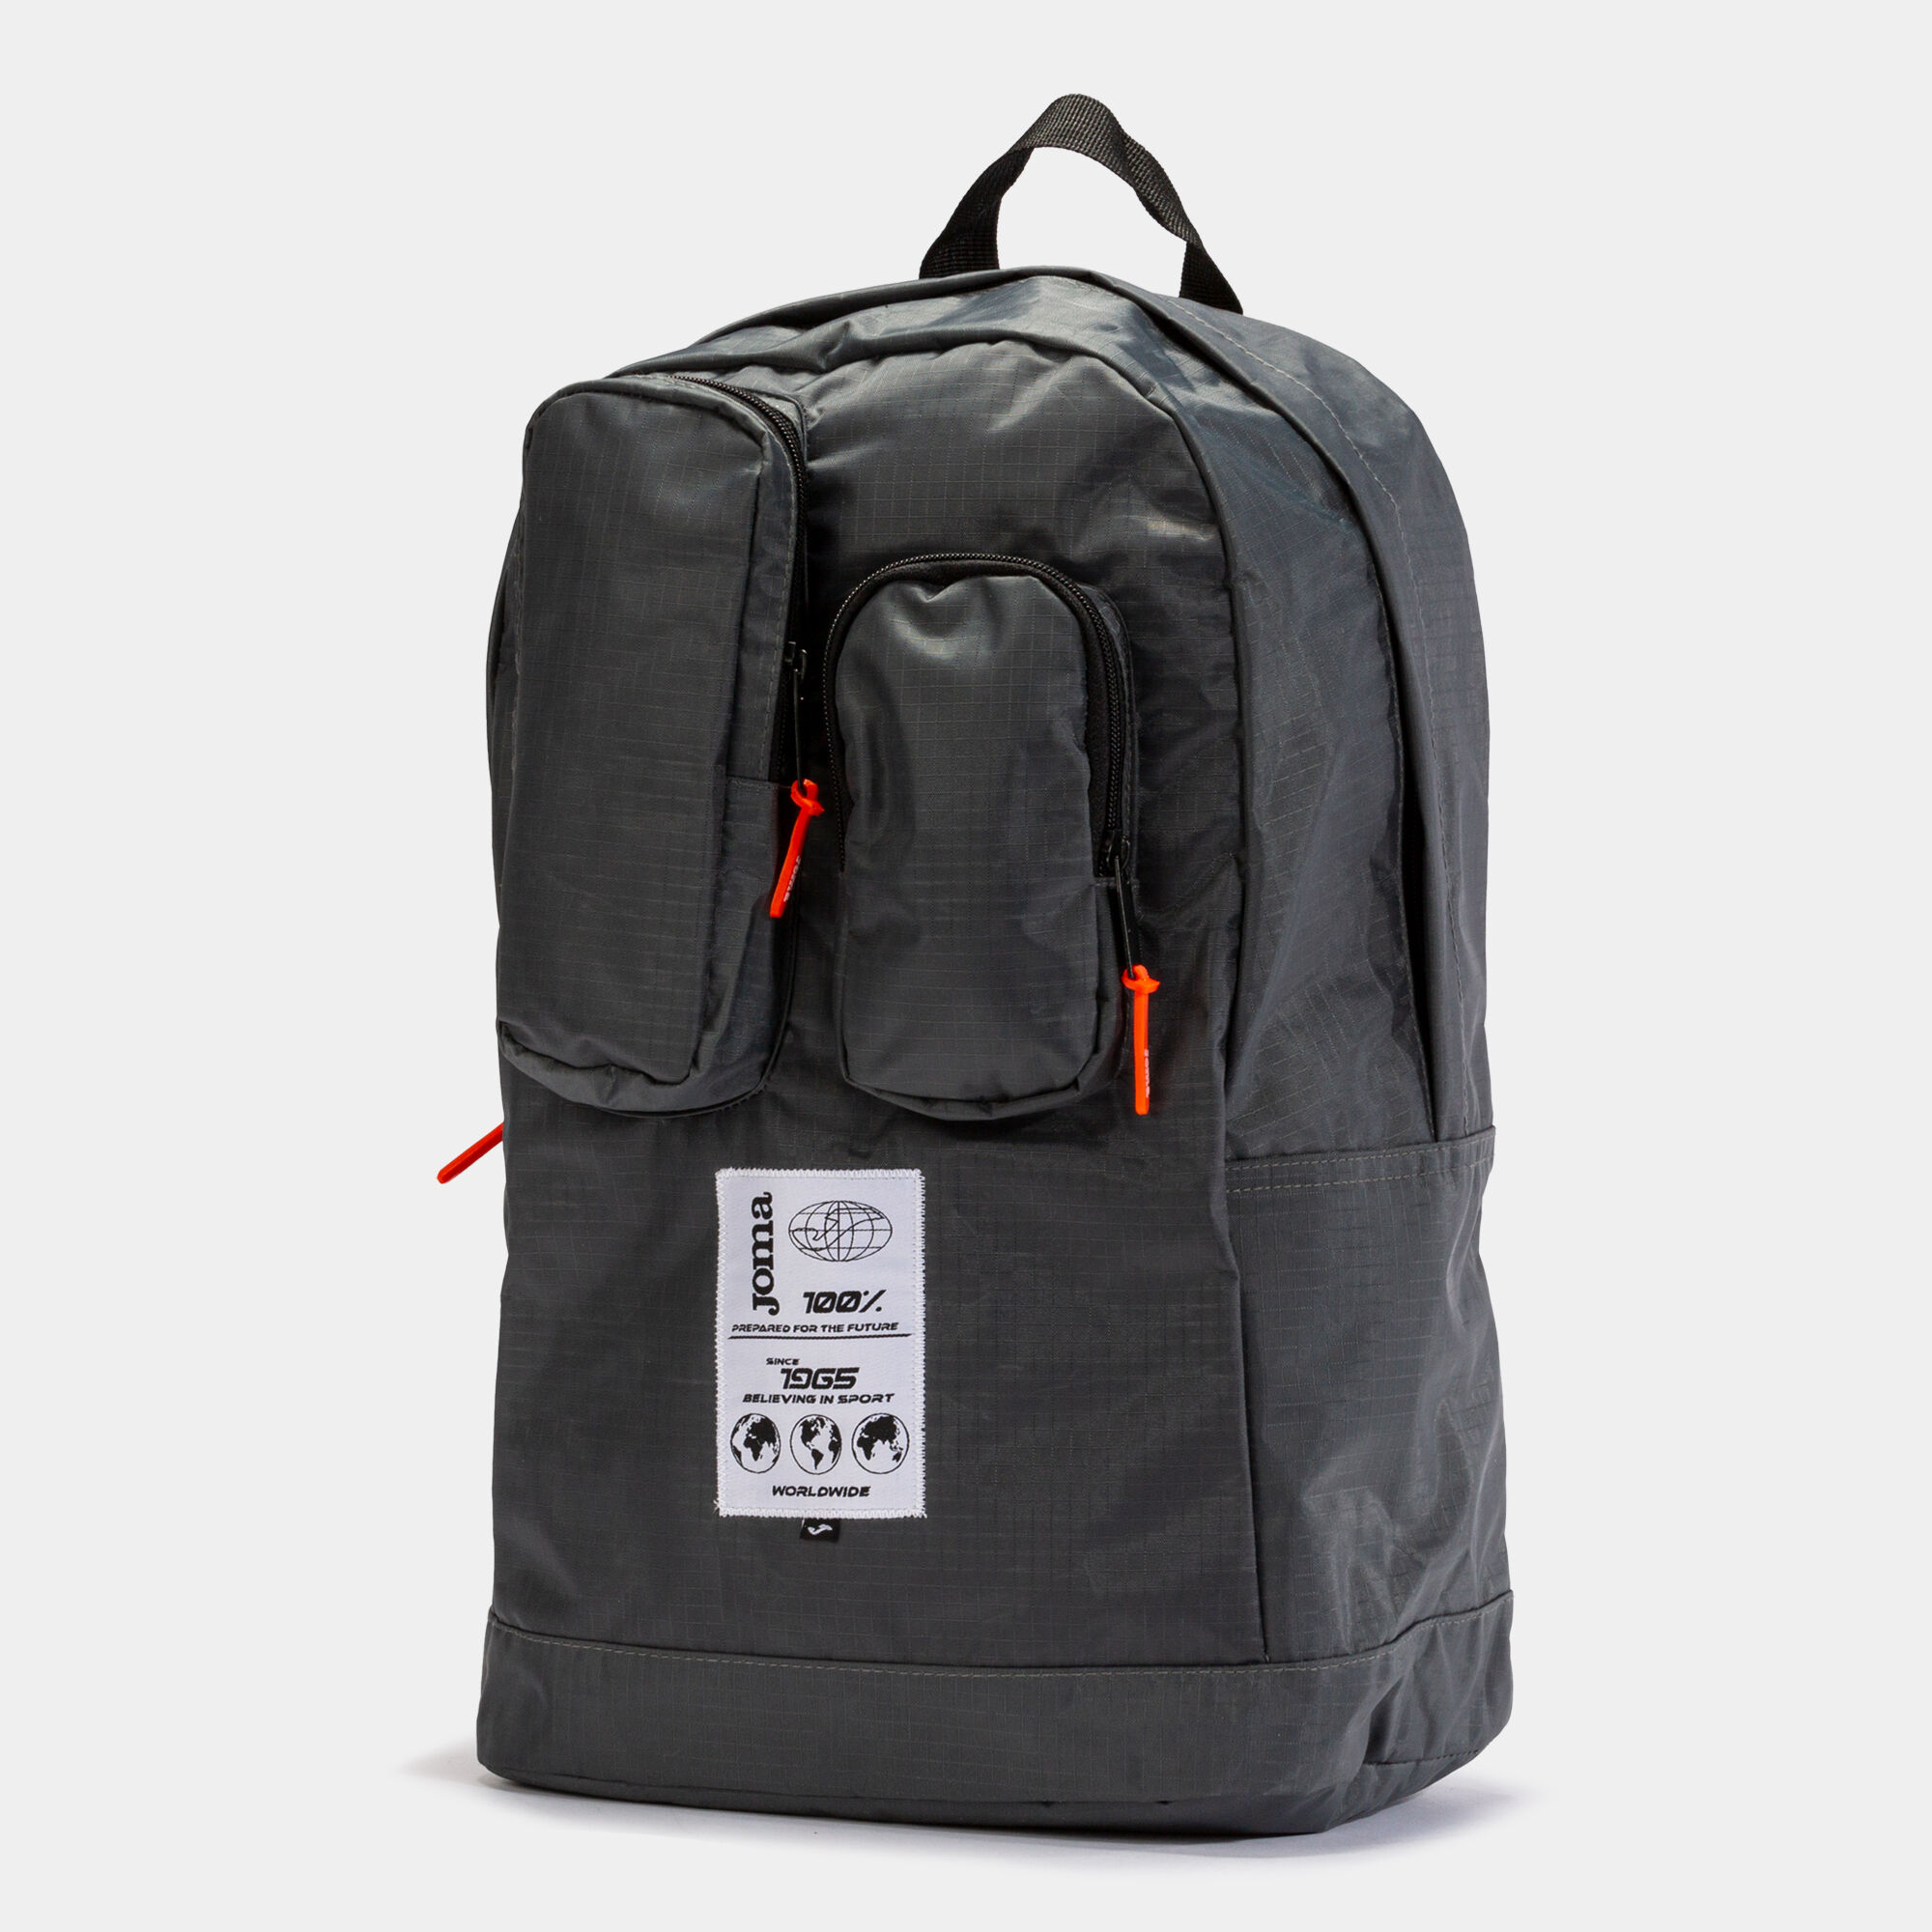 Backpack - shoe bag Worldwide dark gray